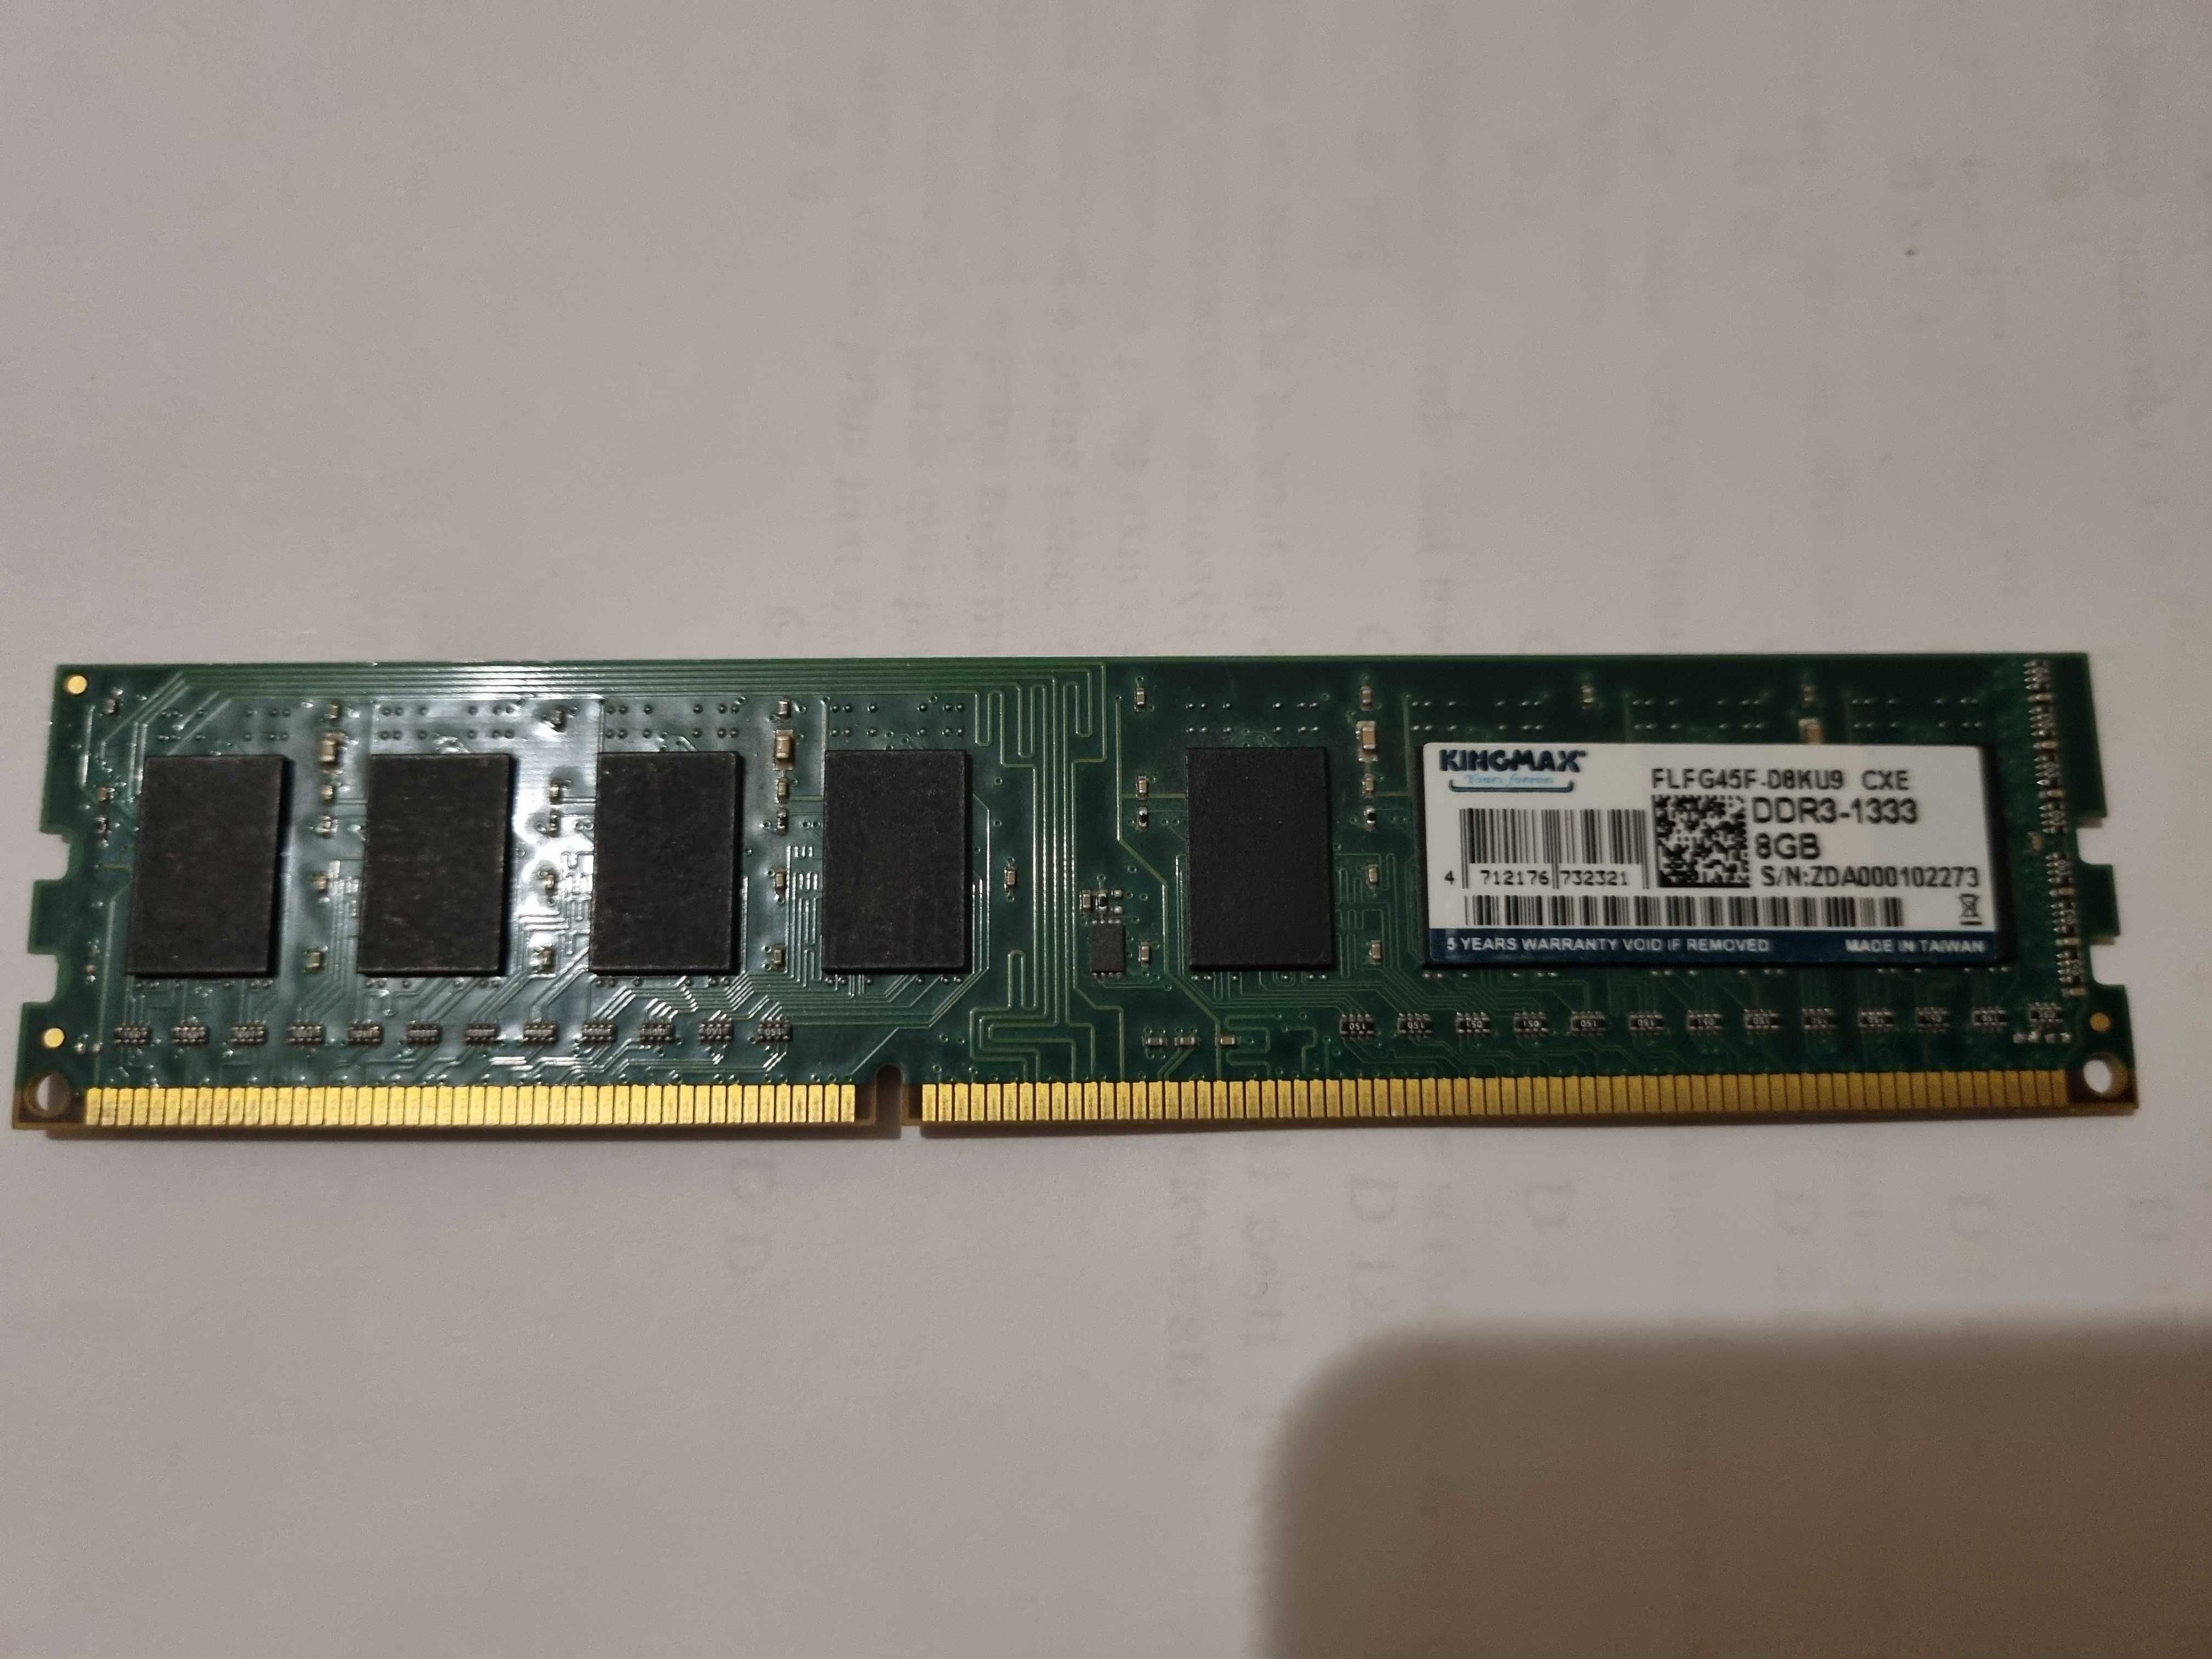 Memorie Ram, DDR3, 1333mhz, capacitate 8GB, kingmax